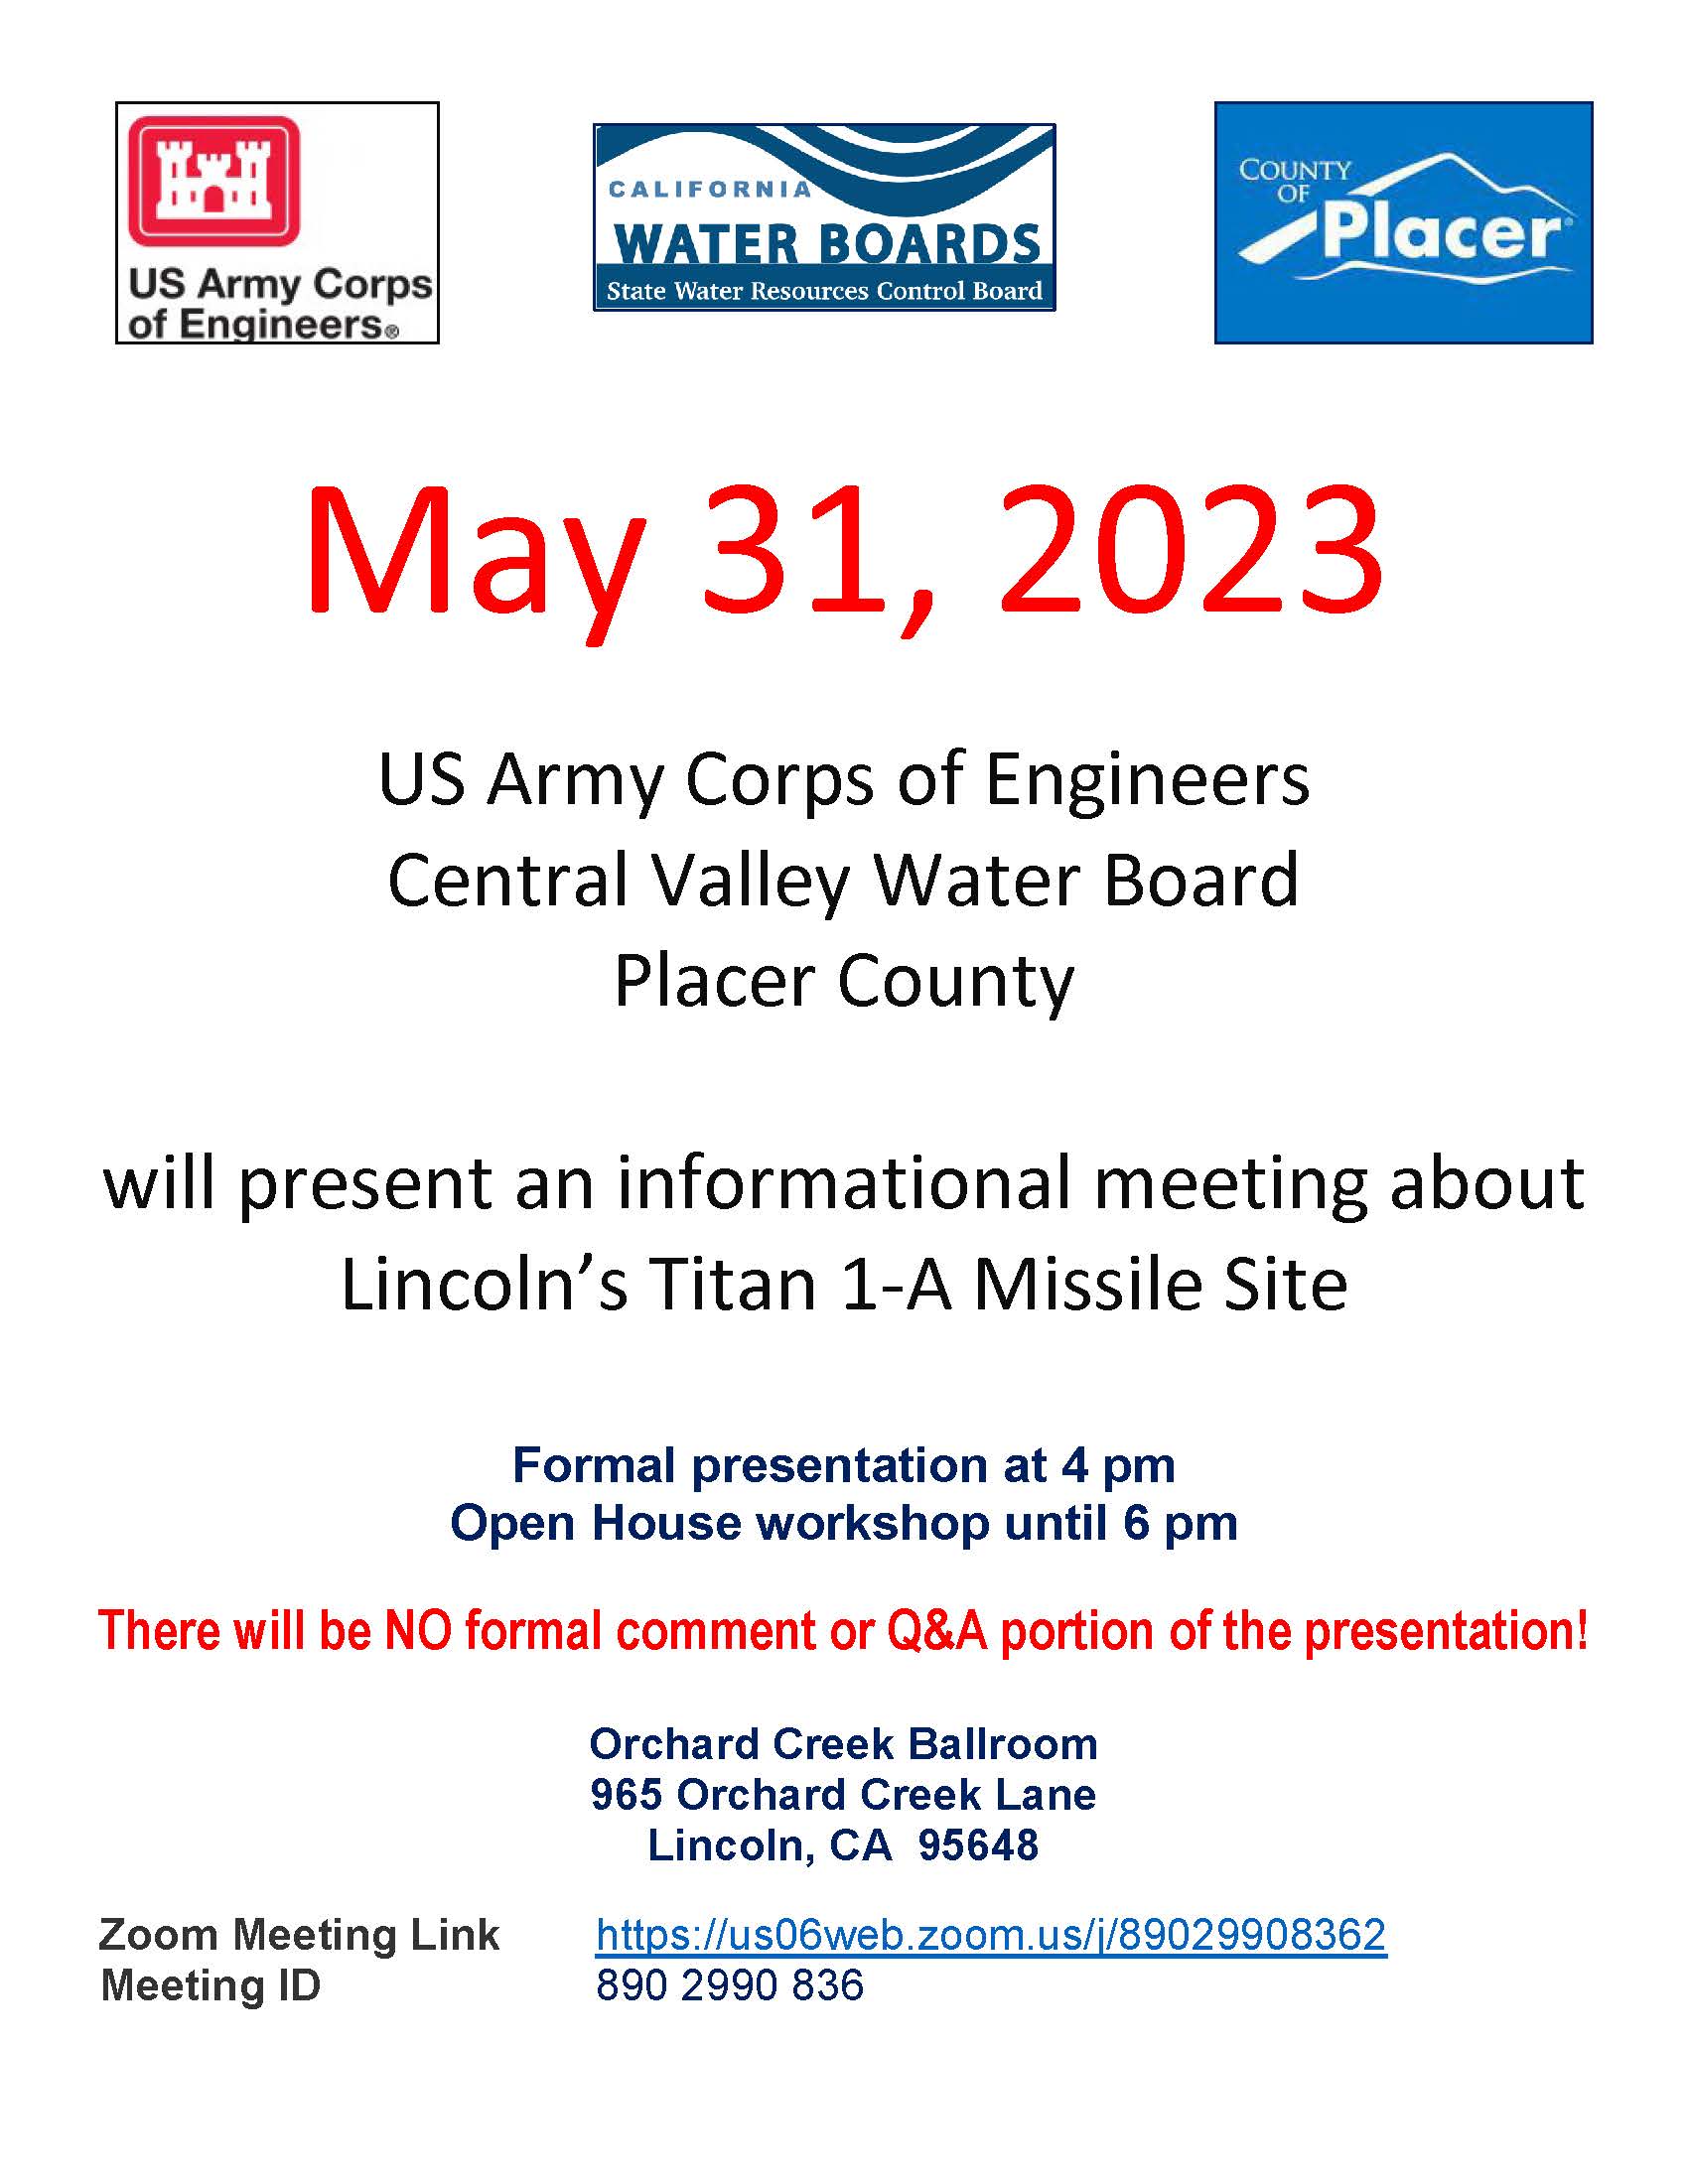 Titan Missile Community Meeting Flyer